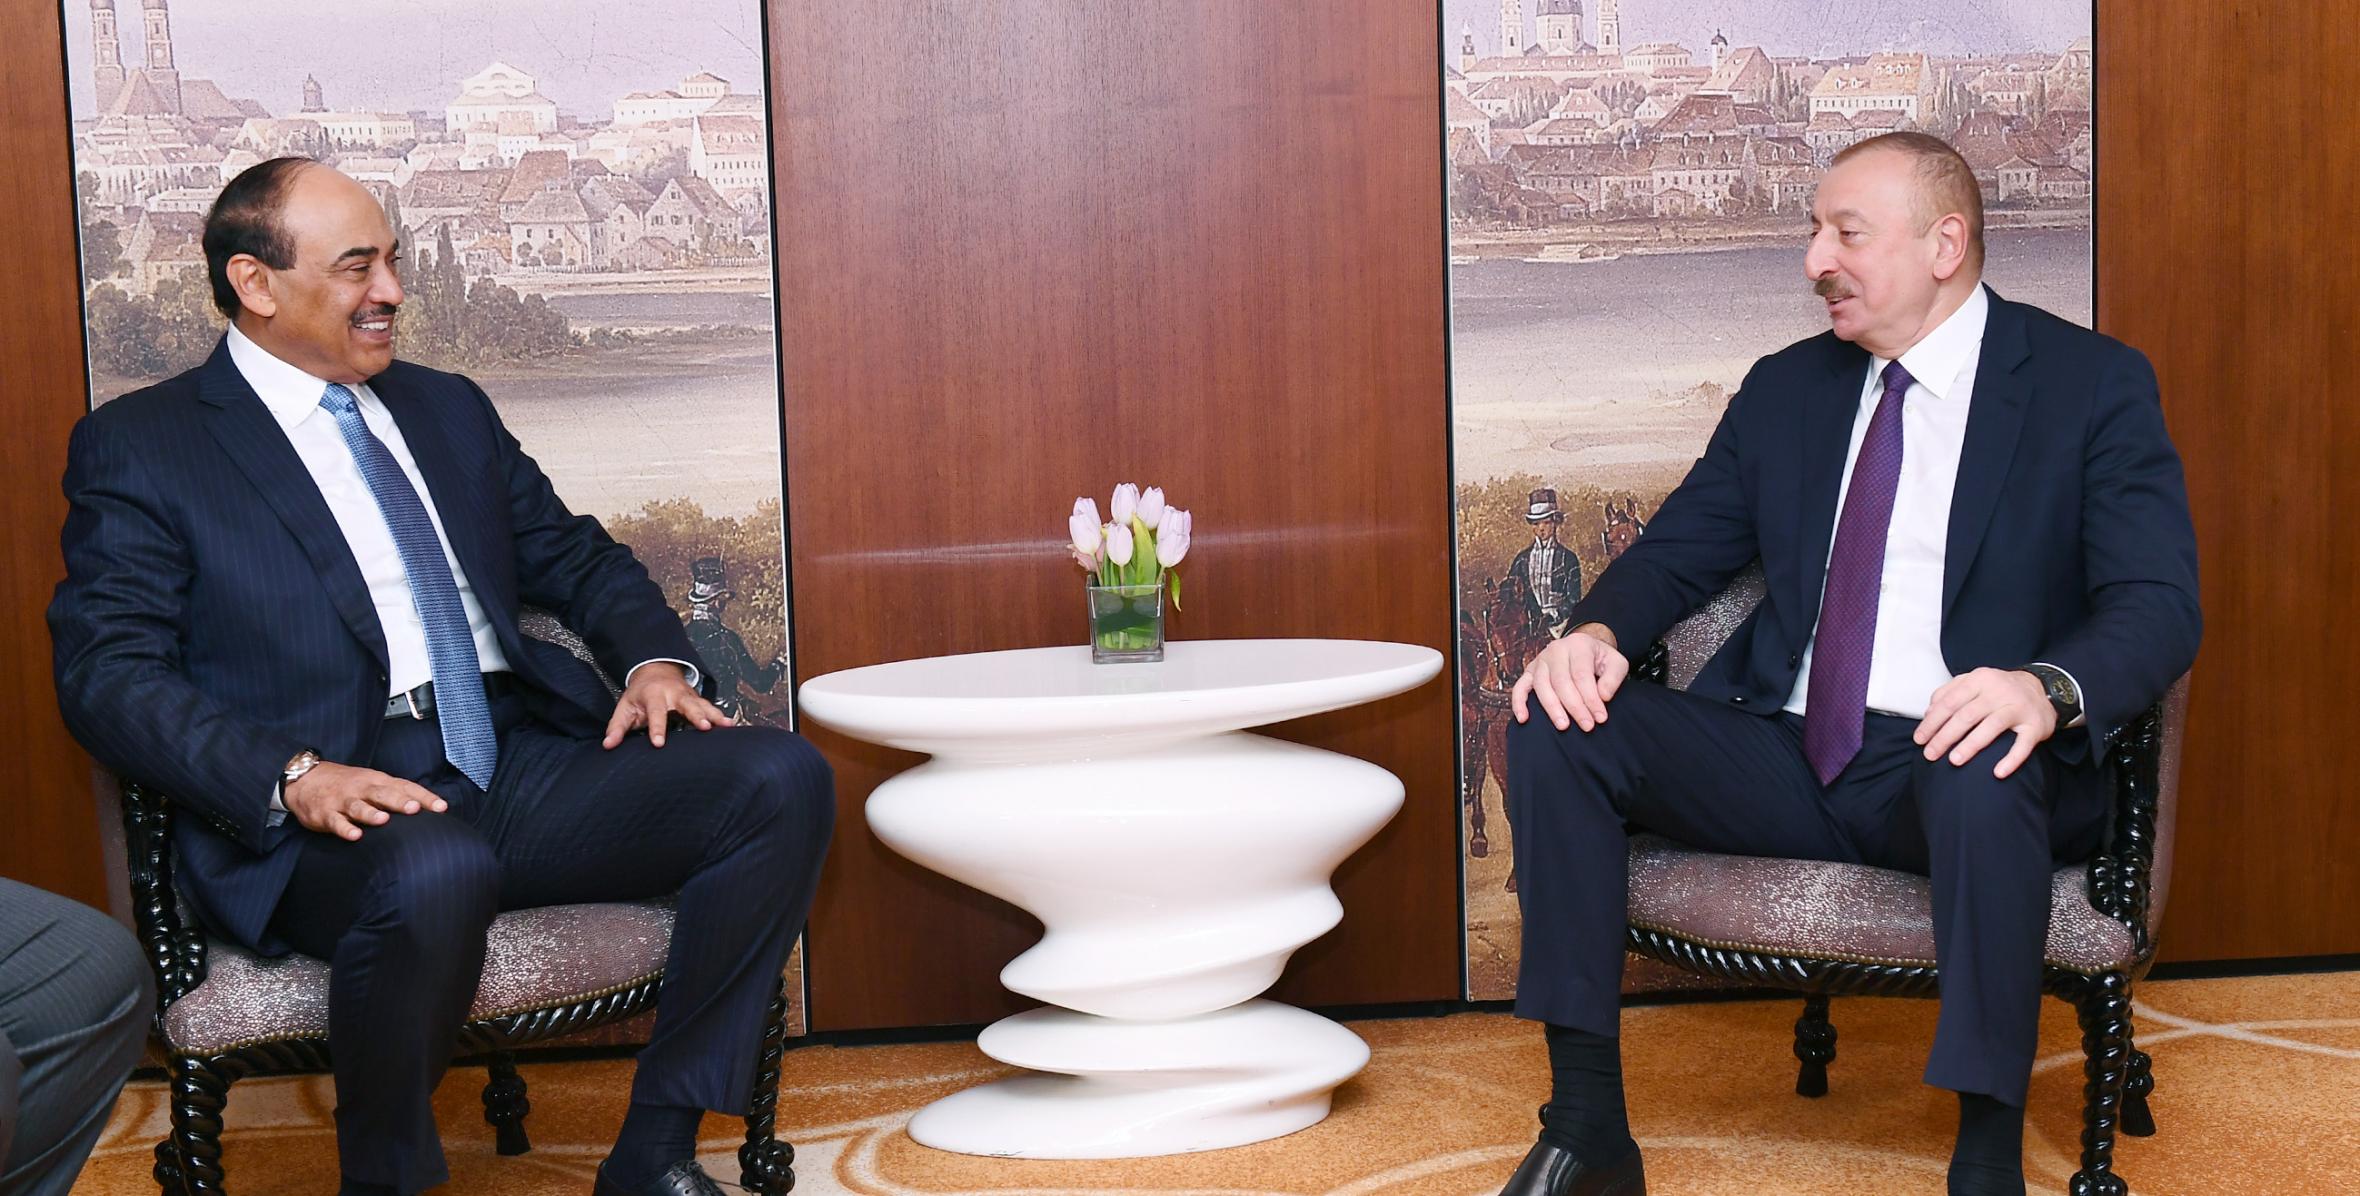 Ilham Aliyev met with Kuwaiti Prime Minister in Munich